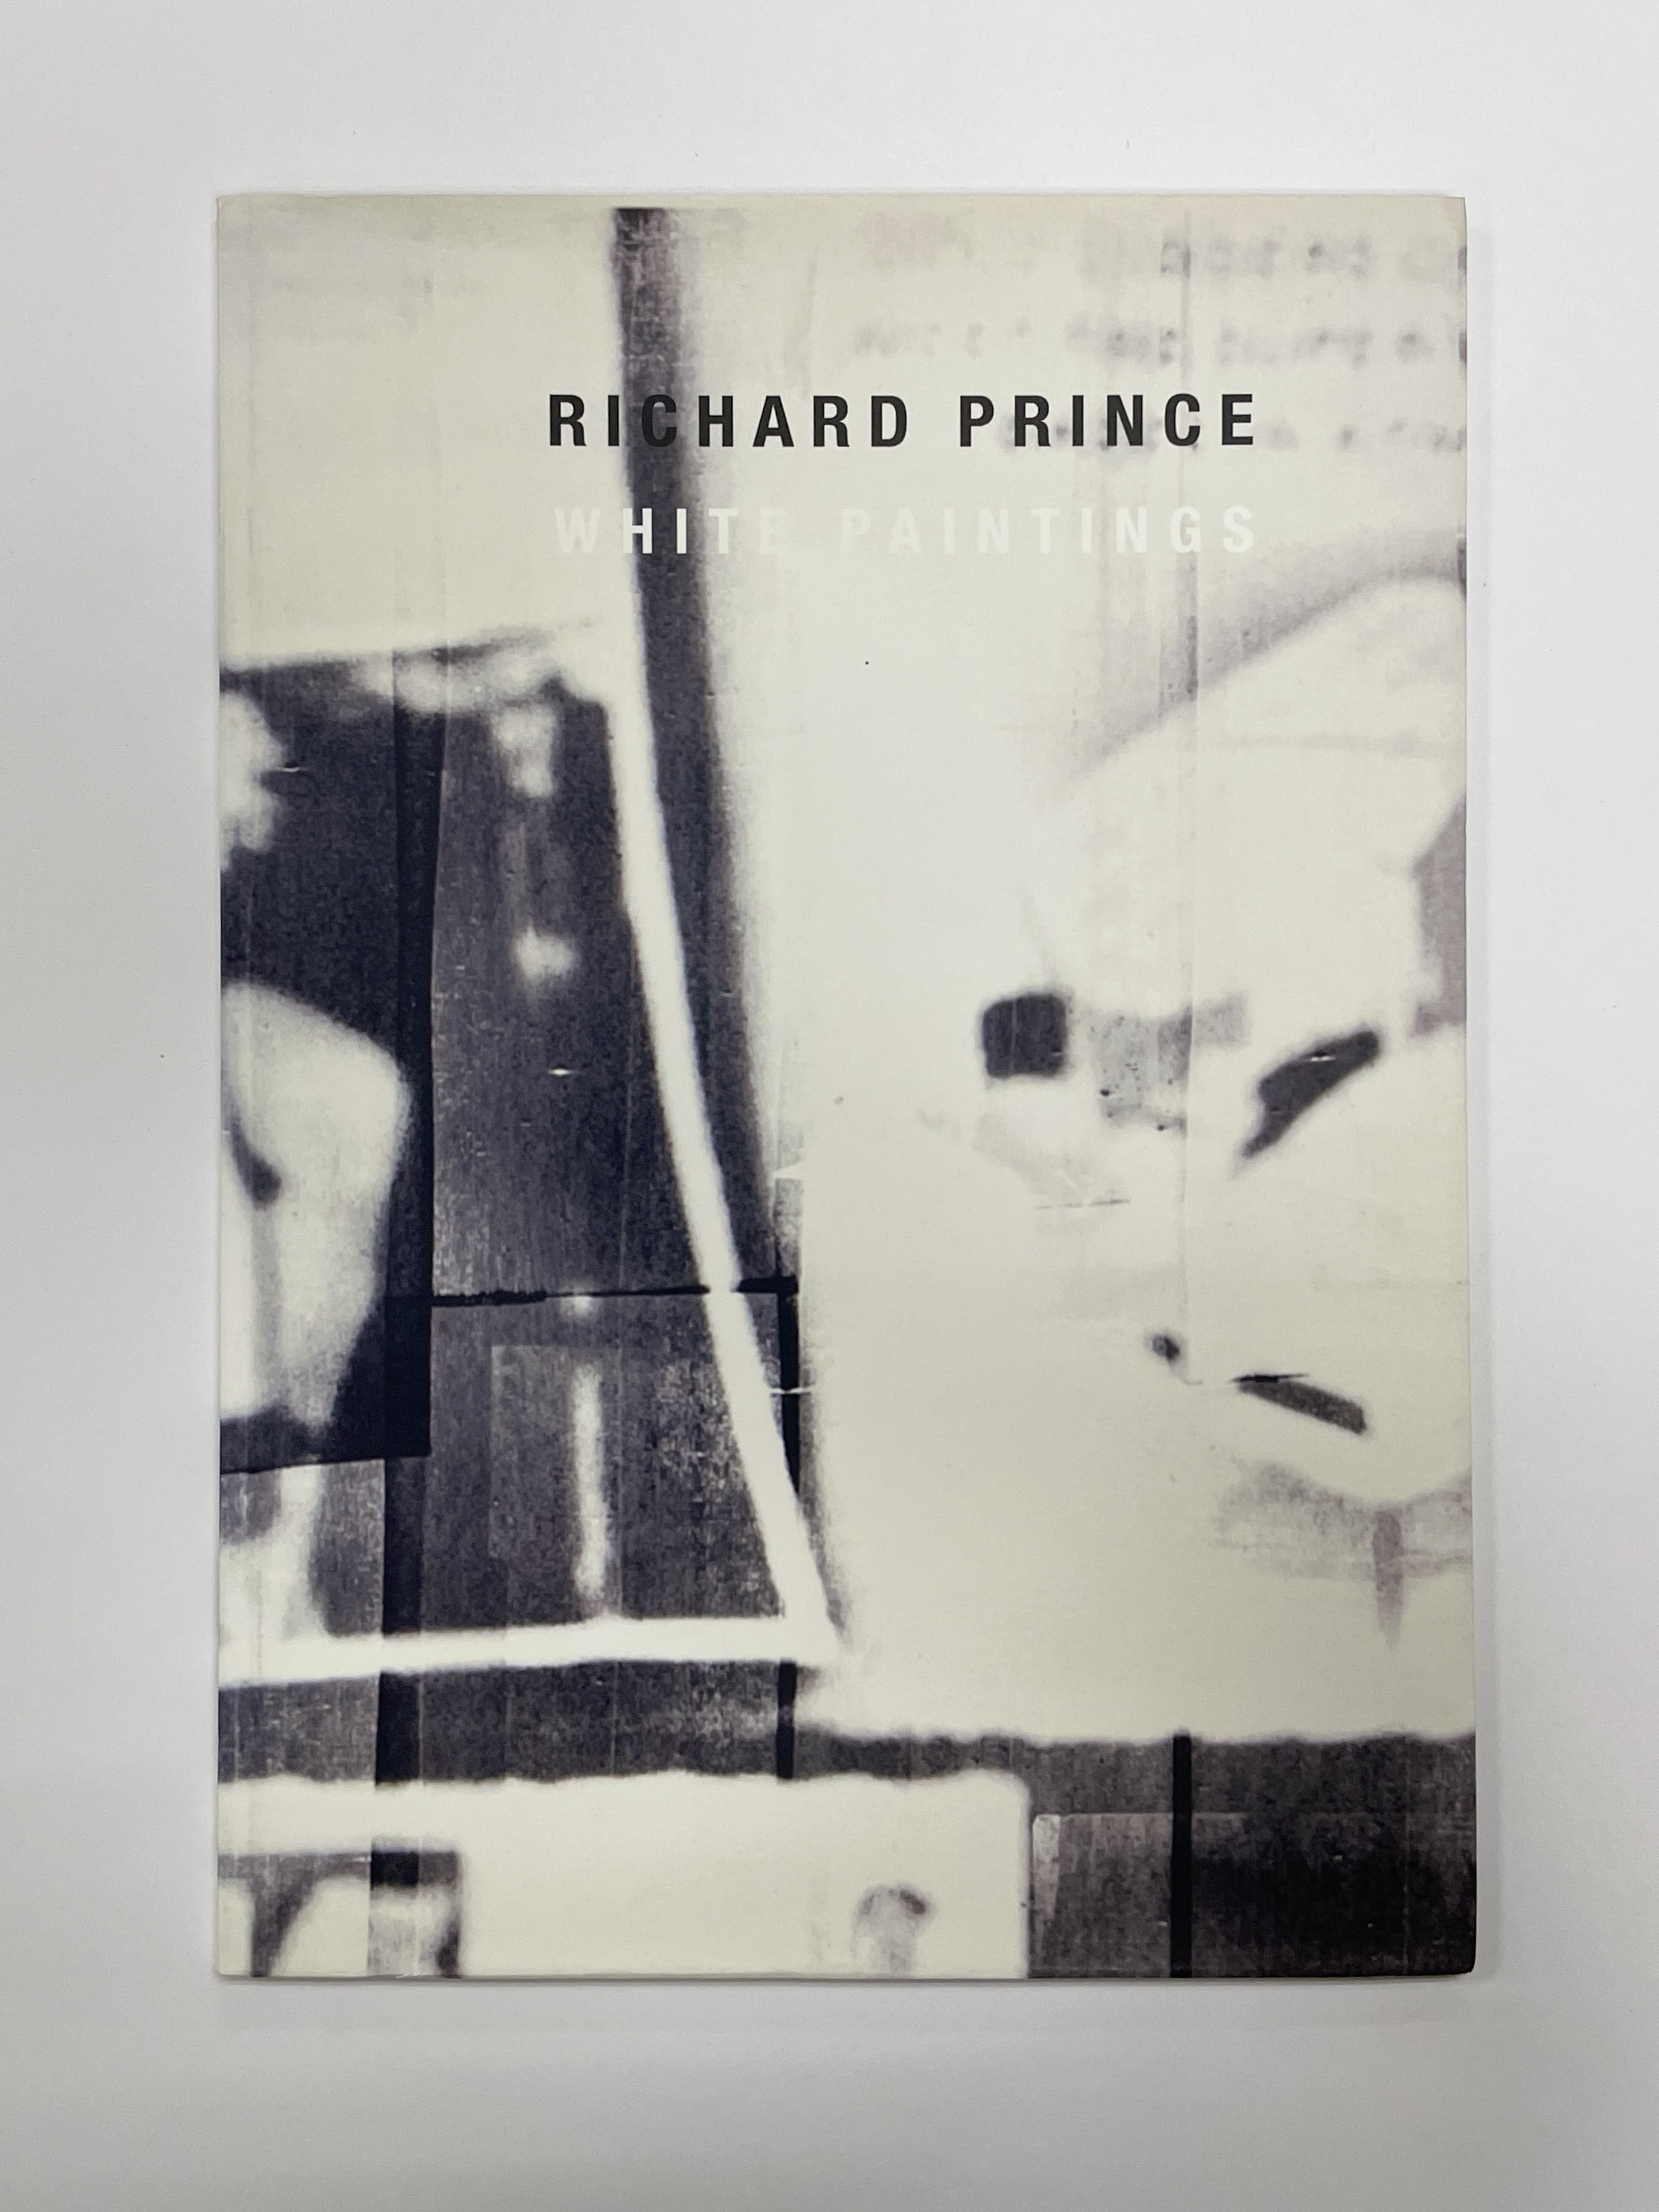 PHOTOGRAPHY & ART BOOKS - RICHARD PRINCE - Image 9 of 9